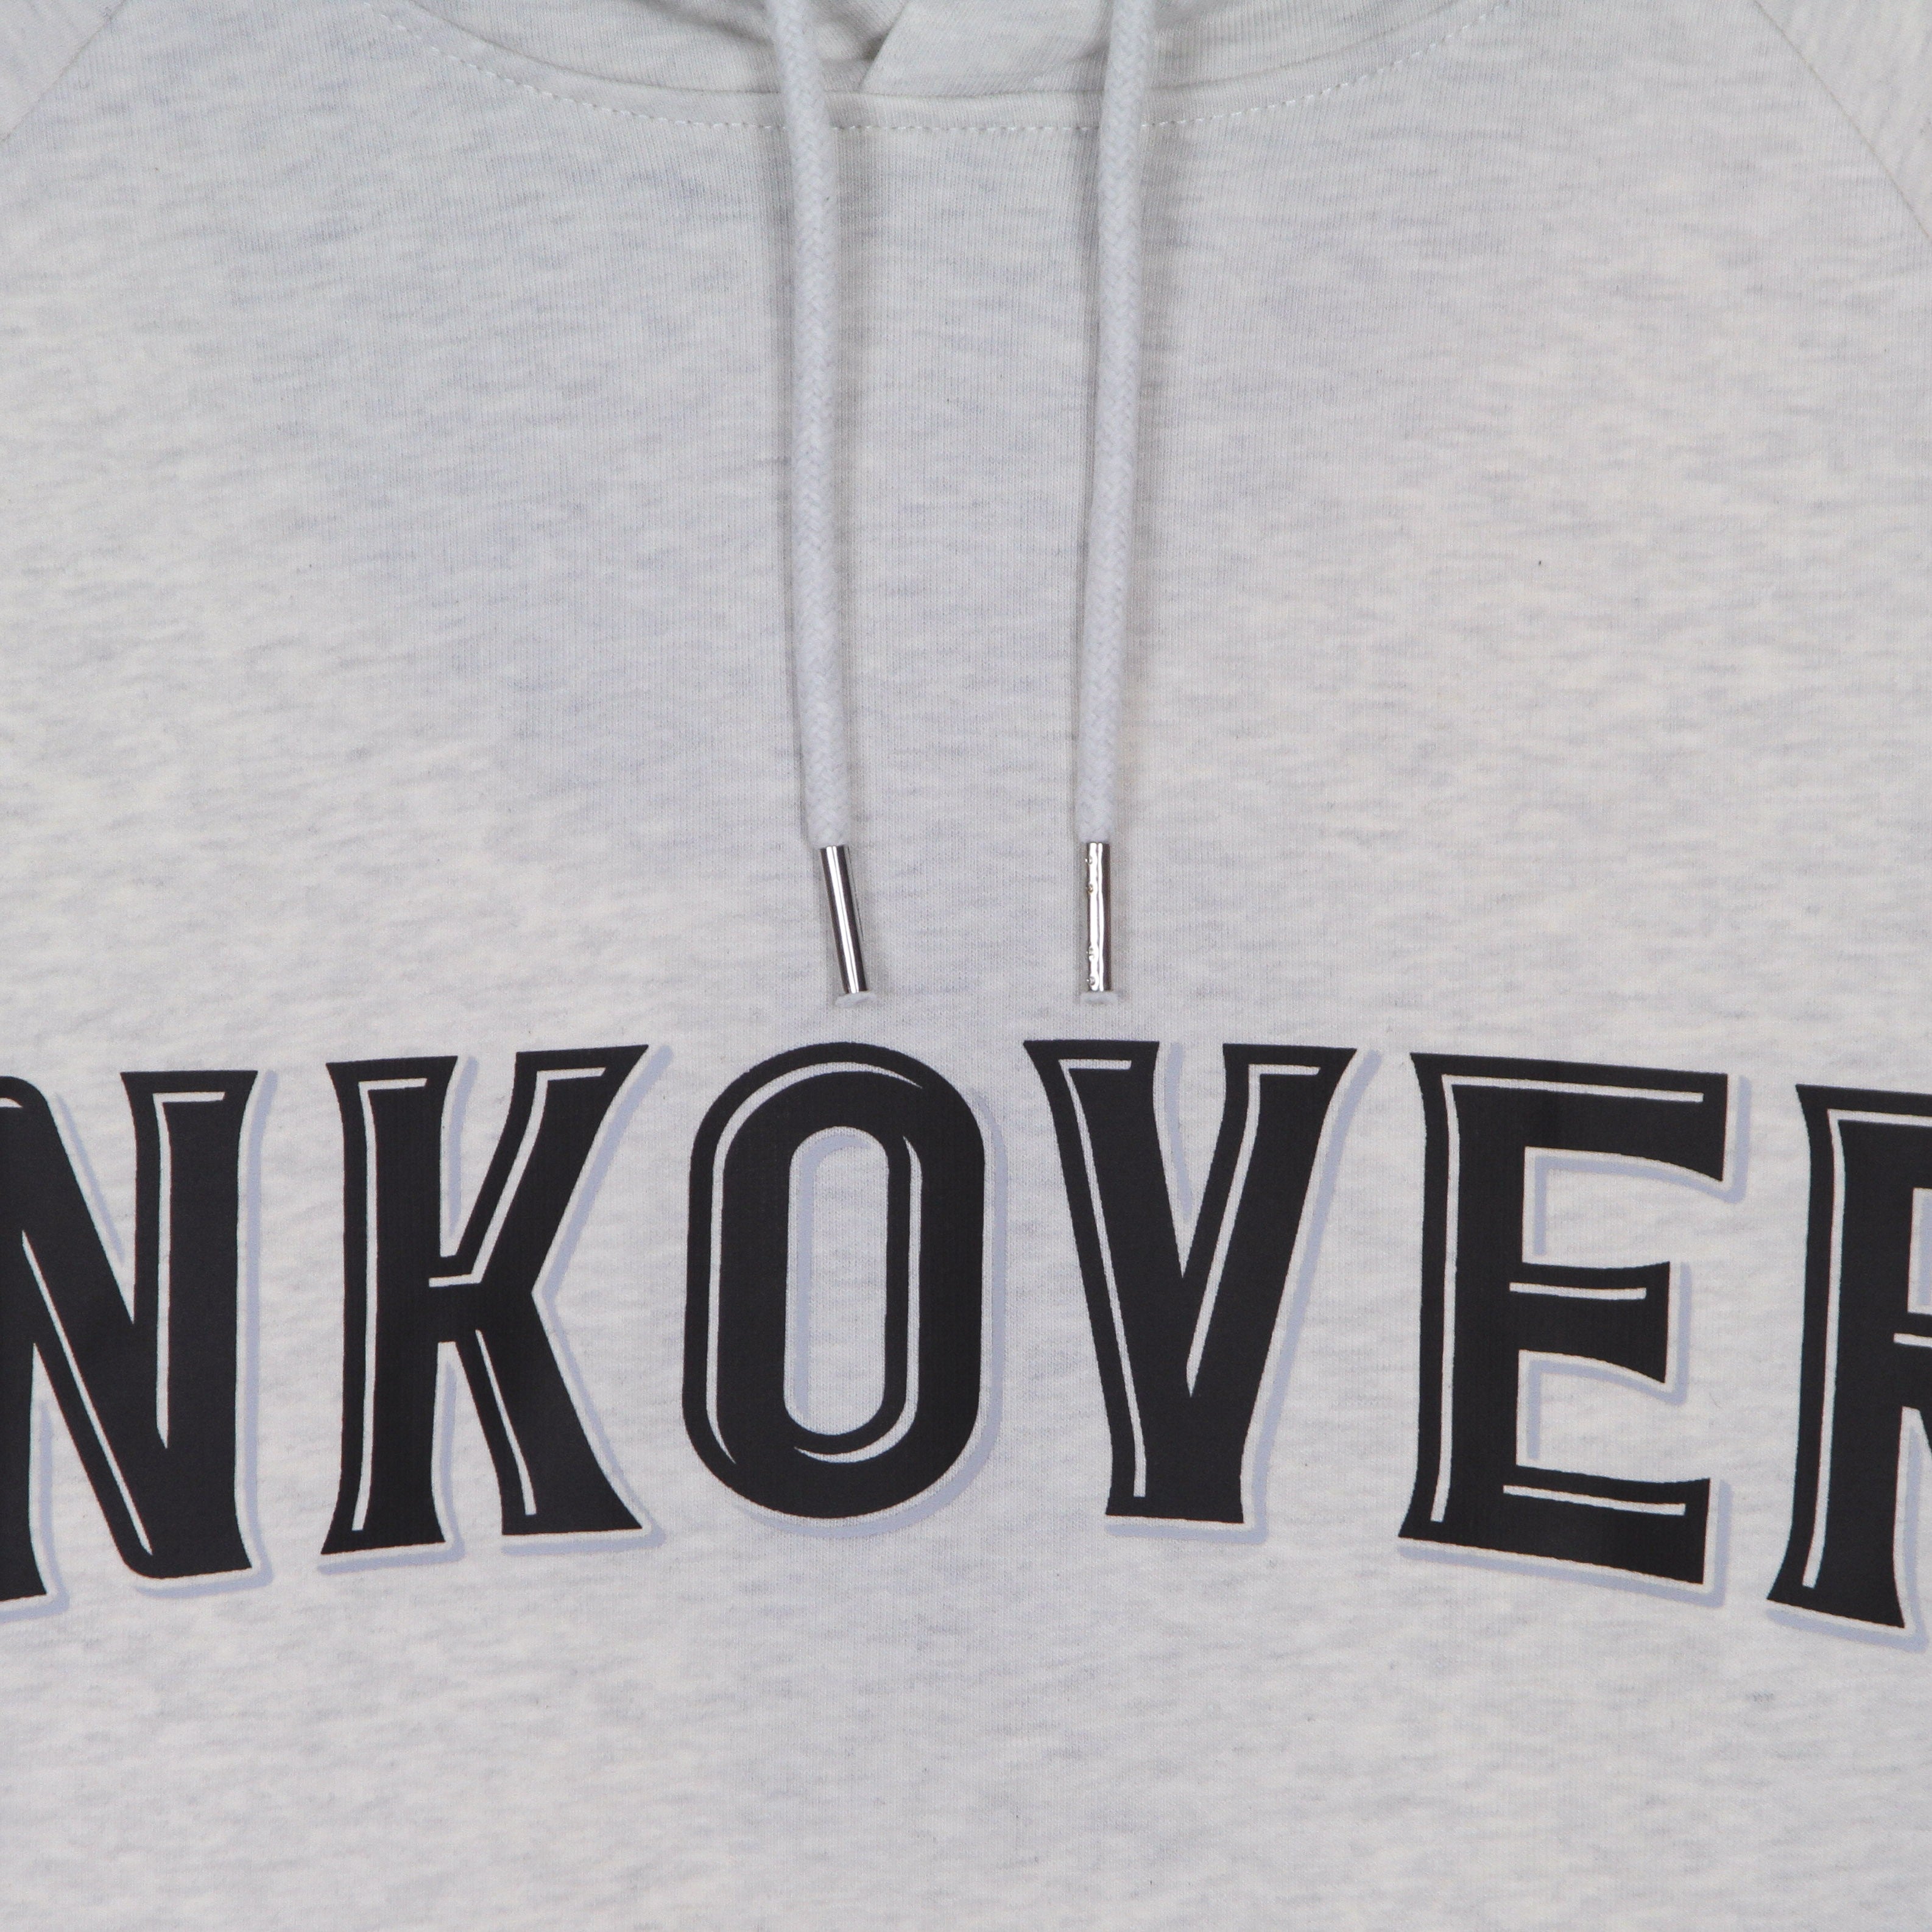 Inkover H2 Ivory Melange Men's Lightweight Hooded Sweatshirt